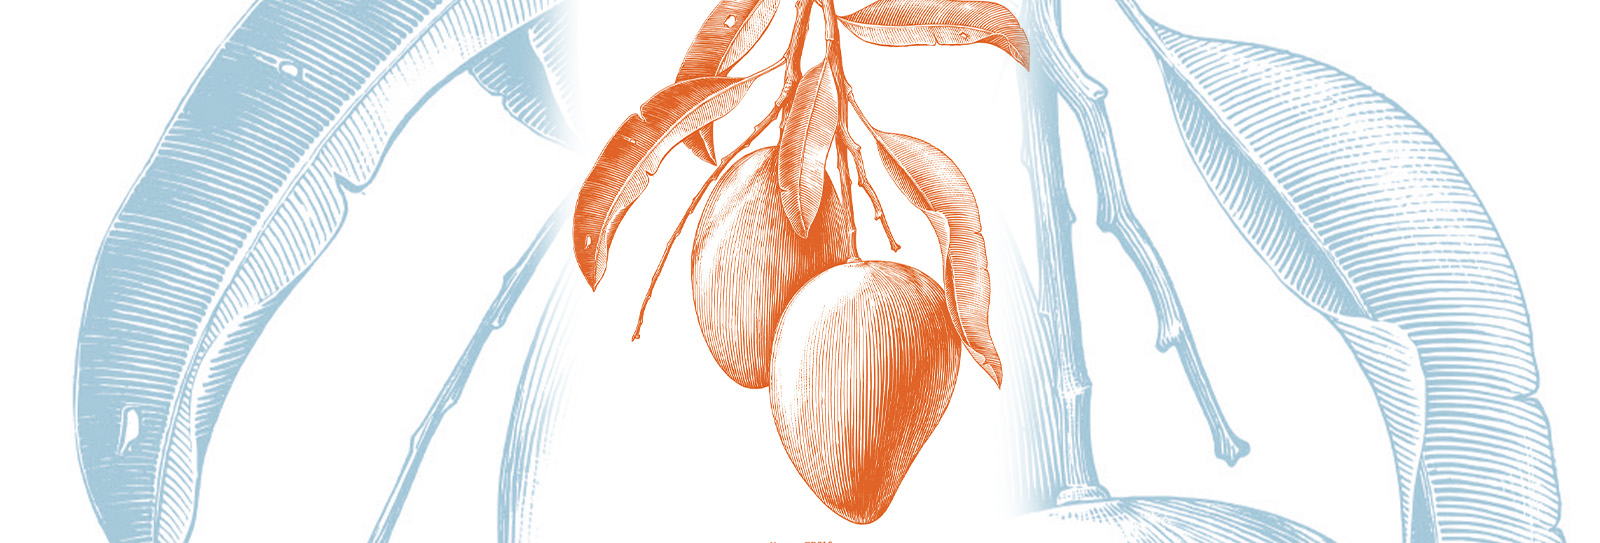 Mango: The Emperor's New Fruit